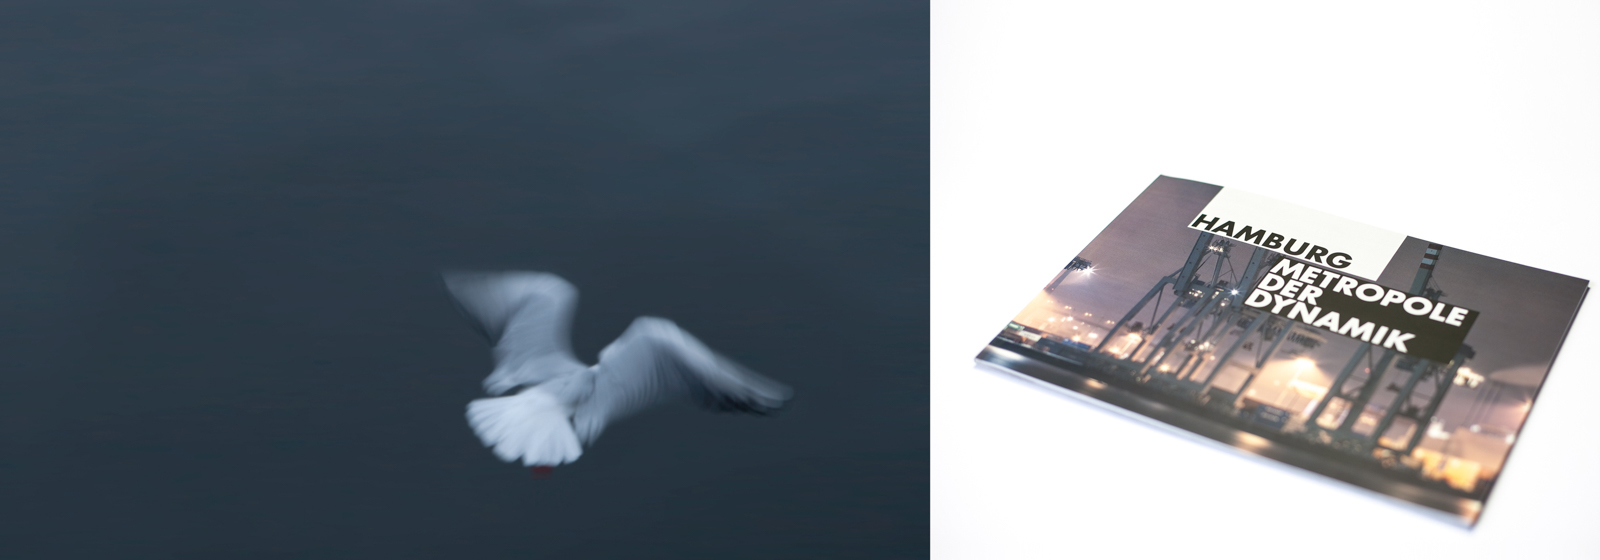 photocollage seagull and hamburg-brochure